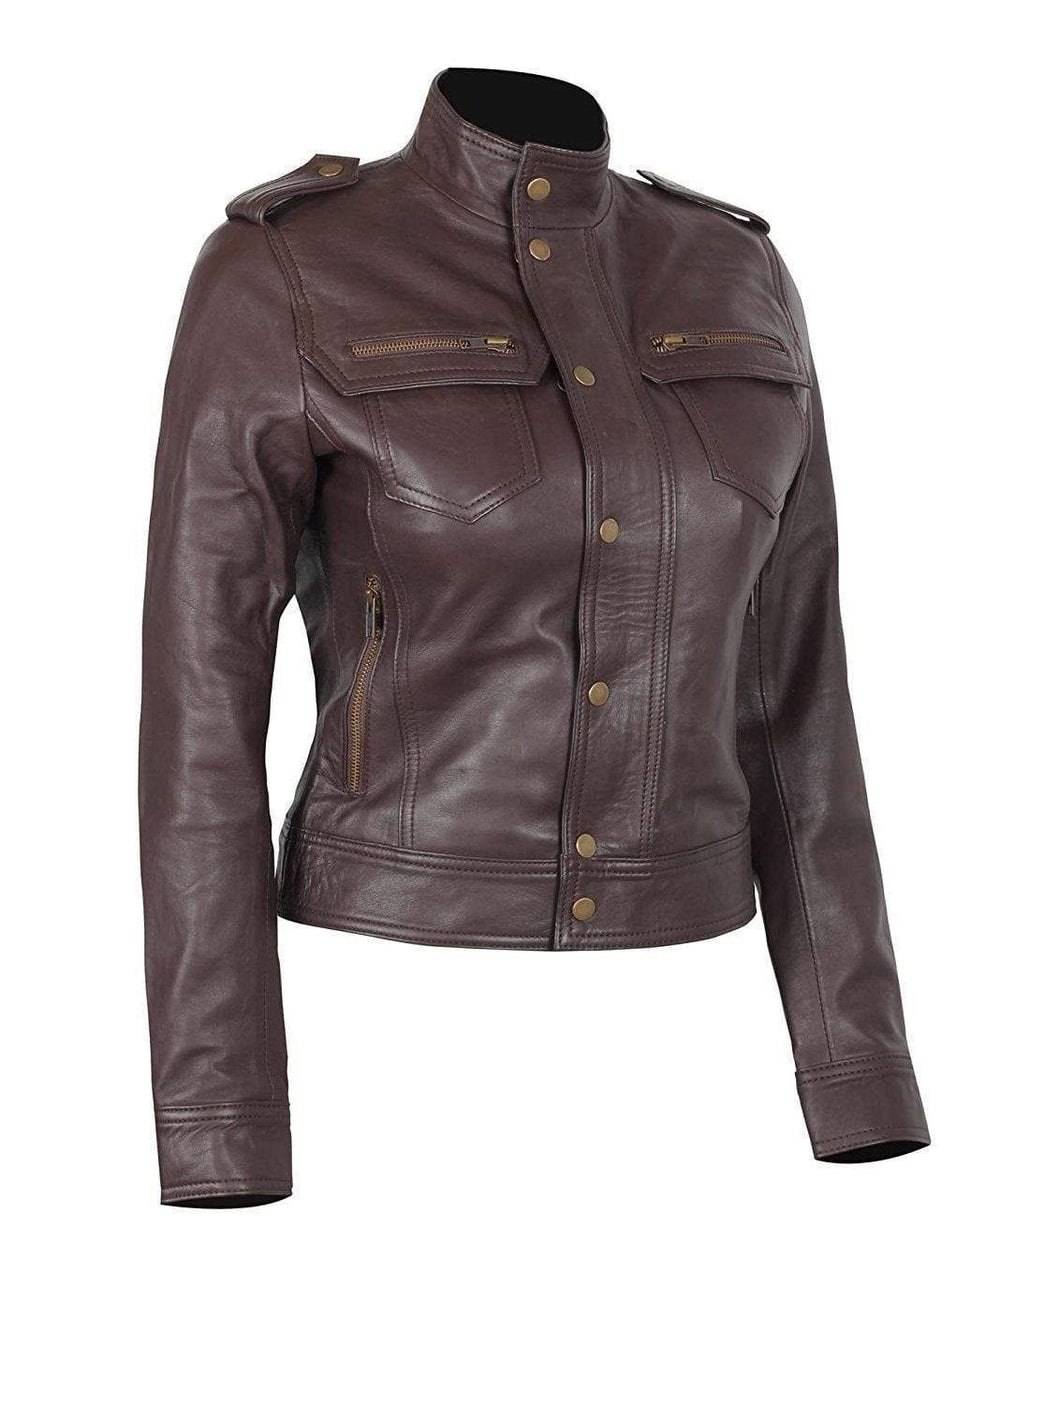 Rise of The Tomb Raider Lara Croft Women's Brown Leather Jacket - leathersguru